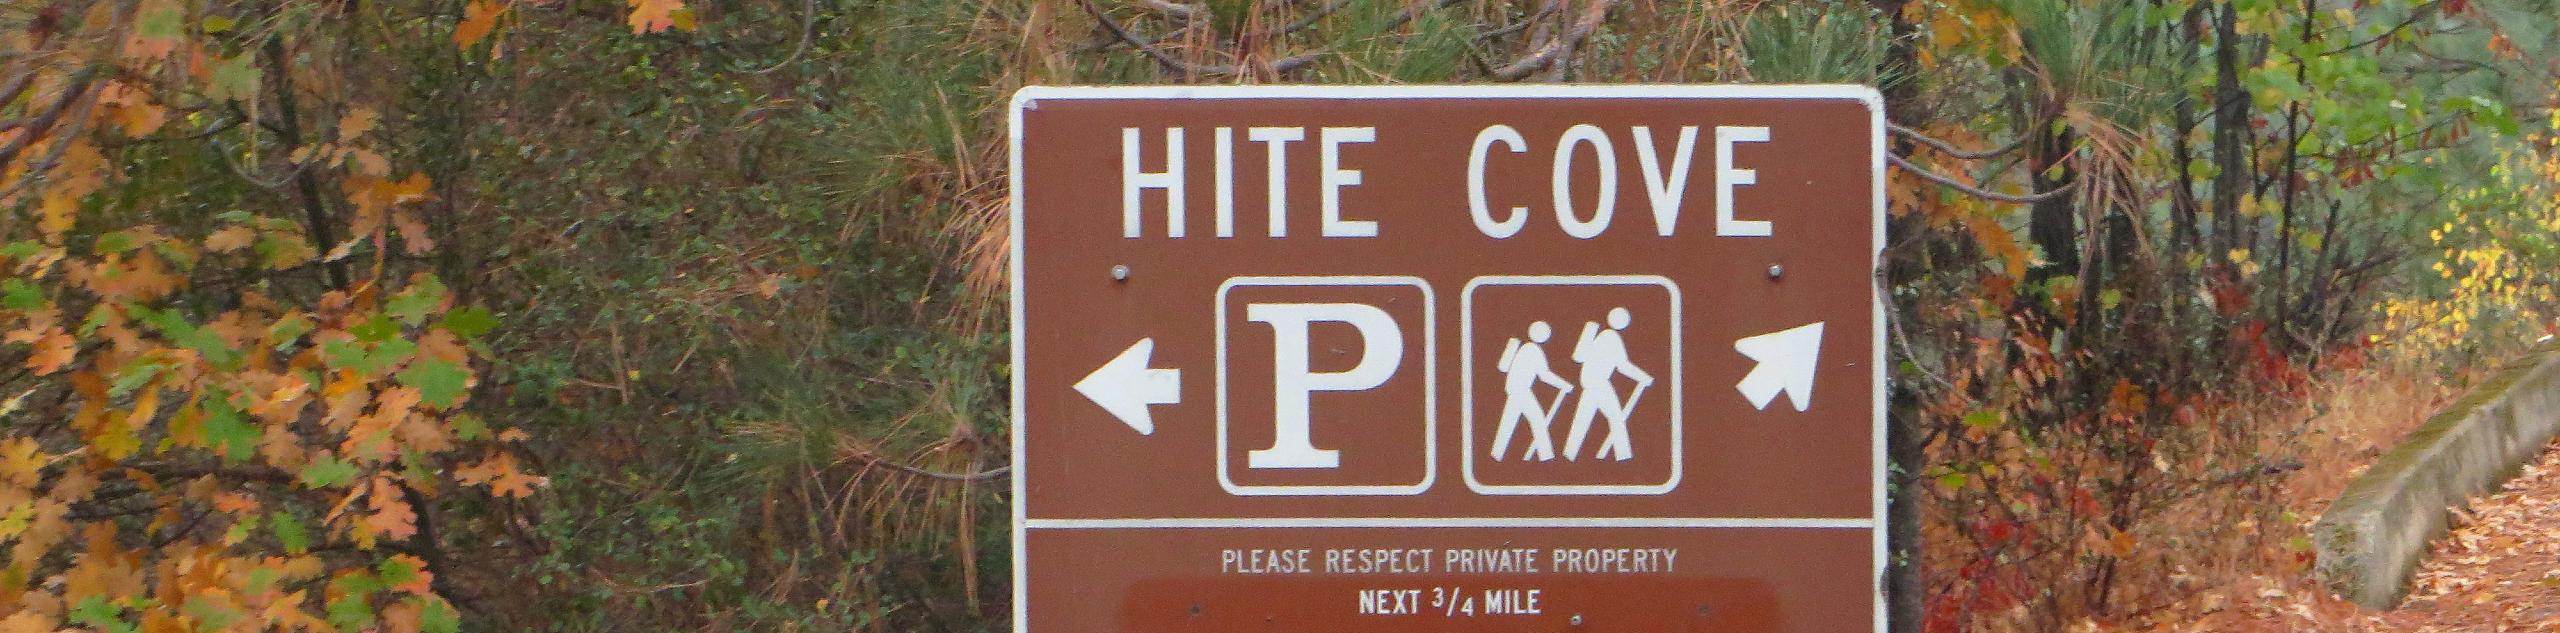 Hite Cove Trail